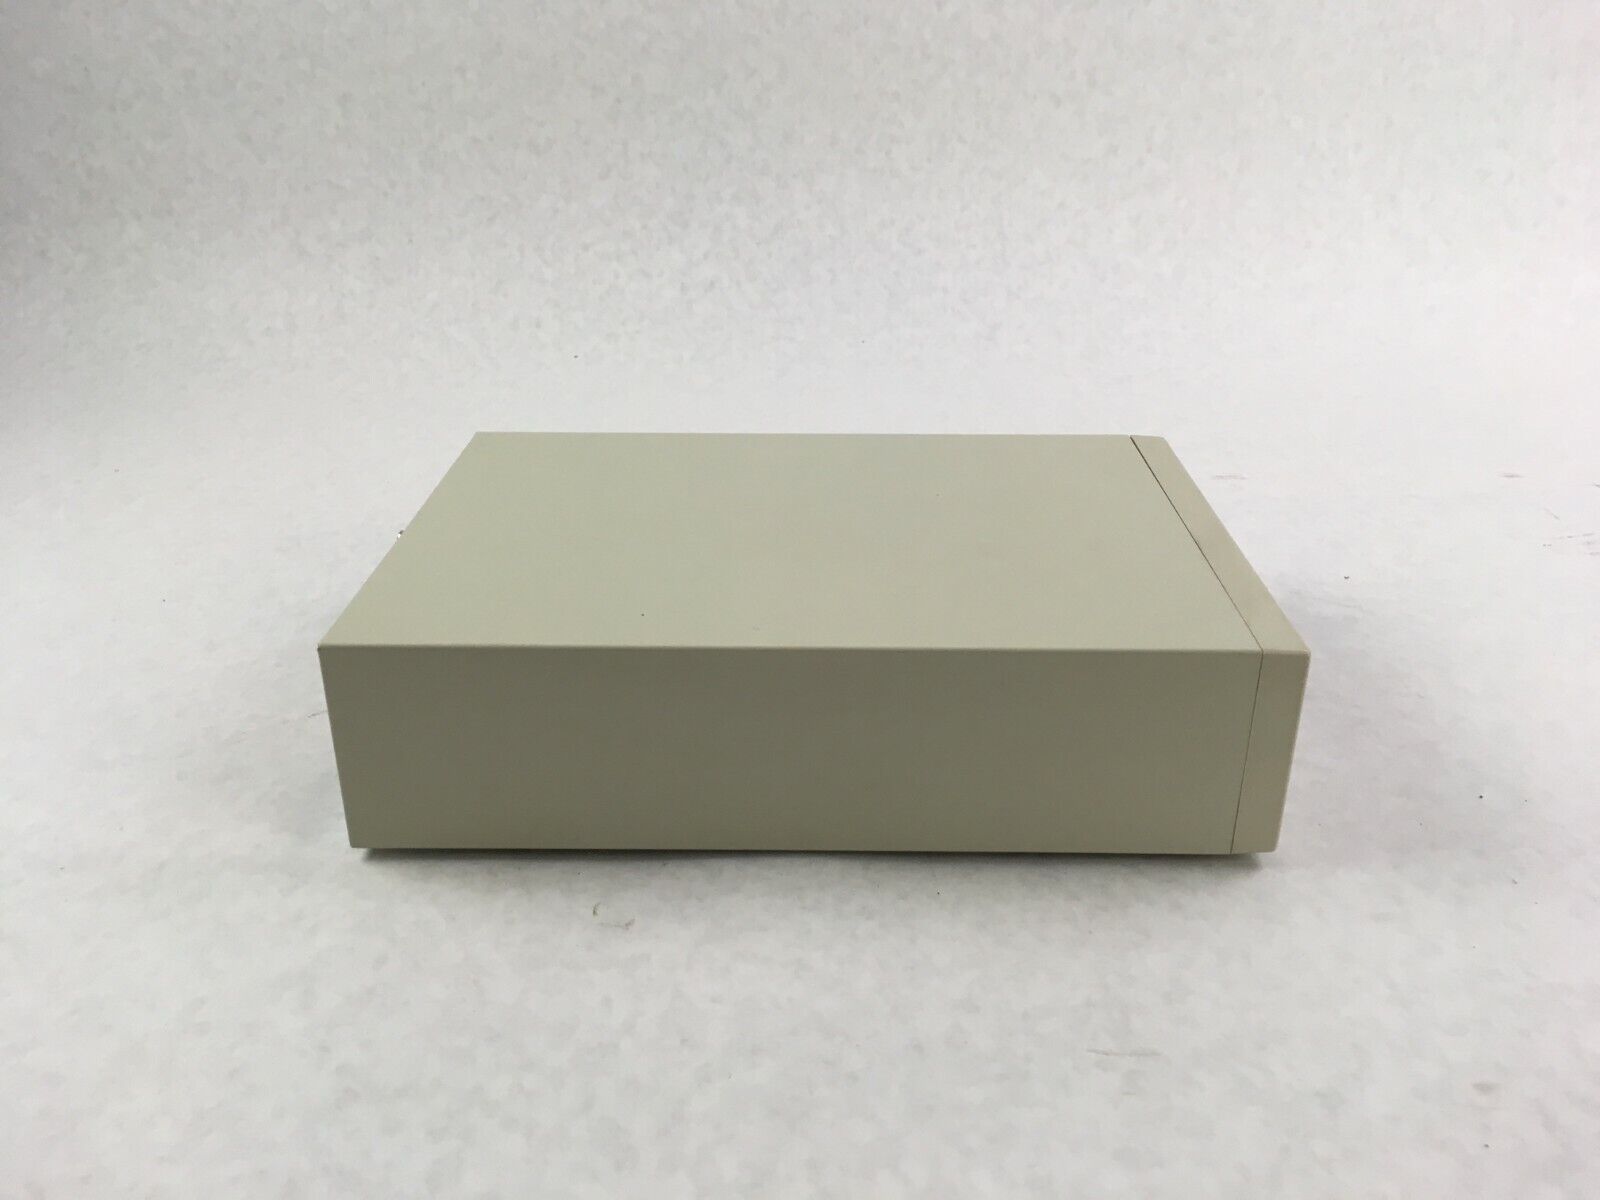 Laerdal Manikin Interface Box for CPR Manikin Cat# 390100 With Power Supply